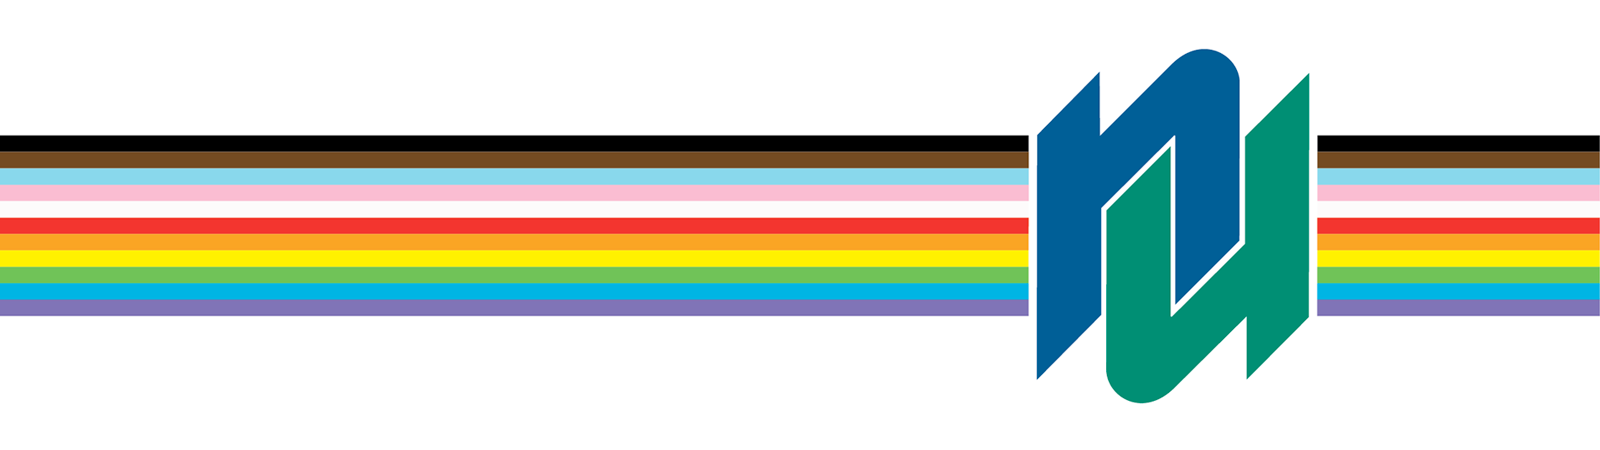 Nipissing pride image featuring rainbow stripes and blue NU symbol